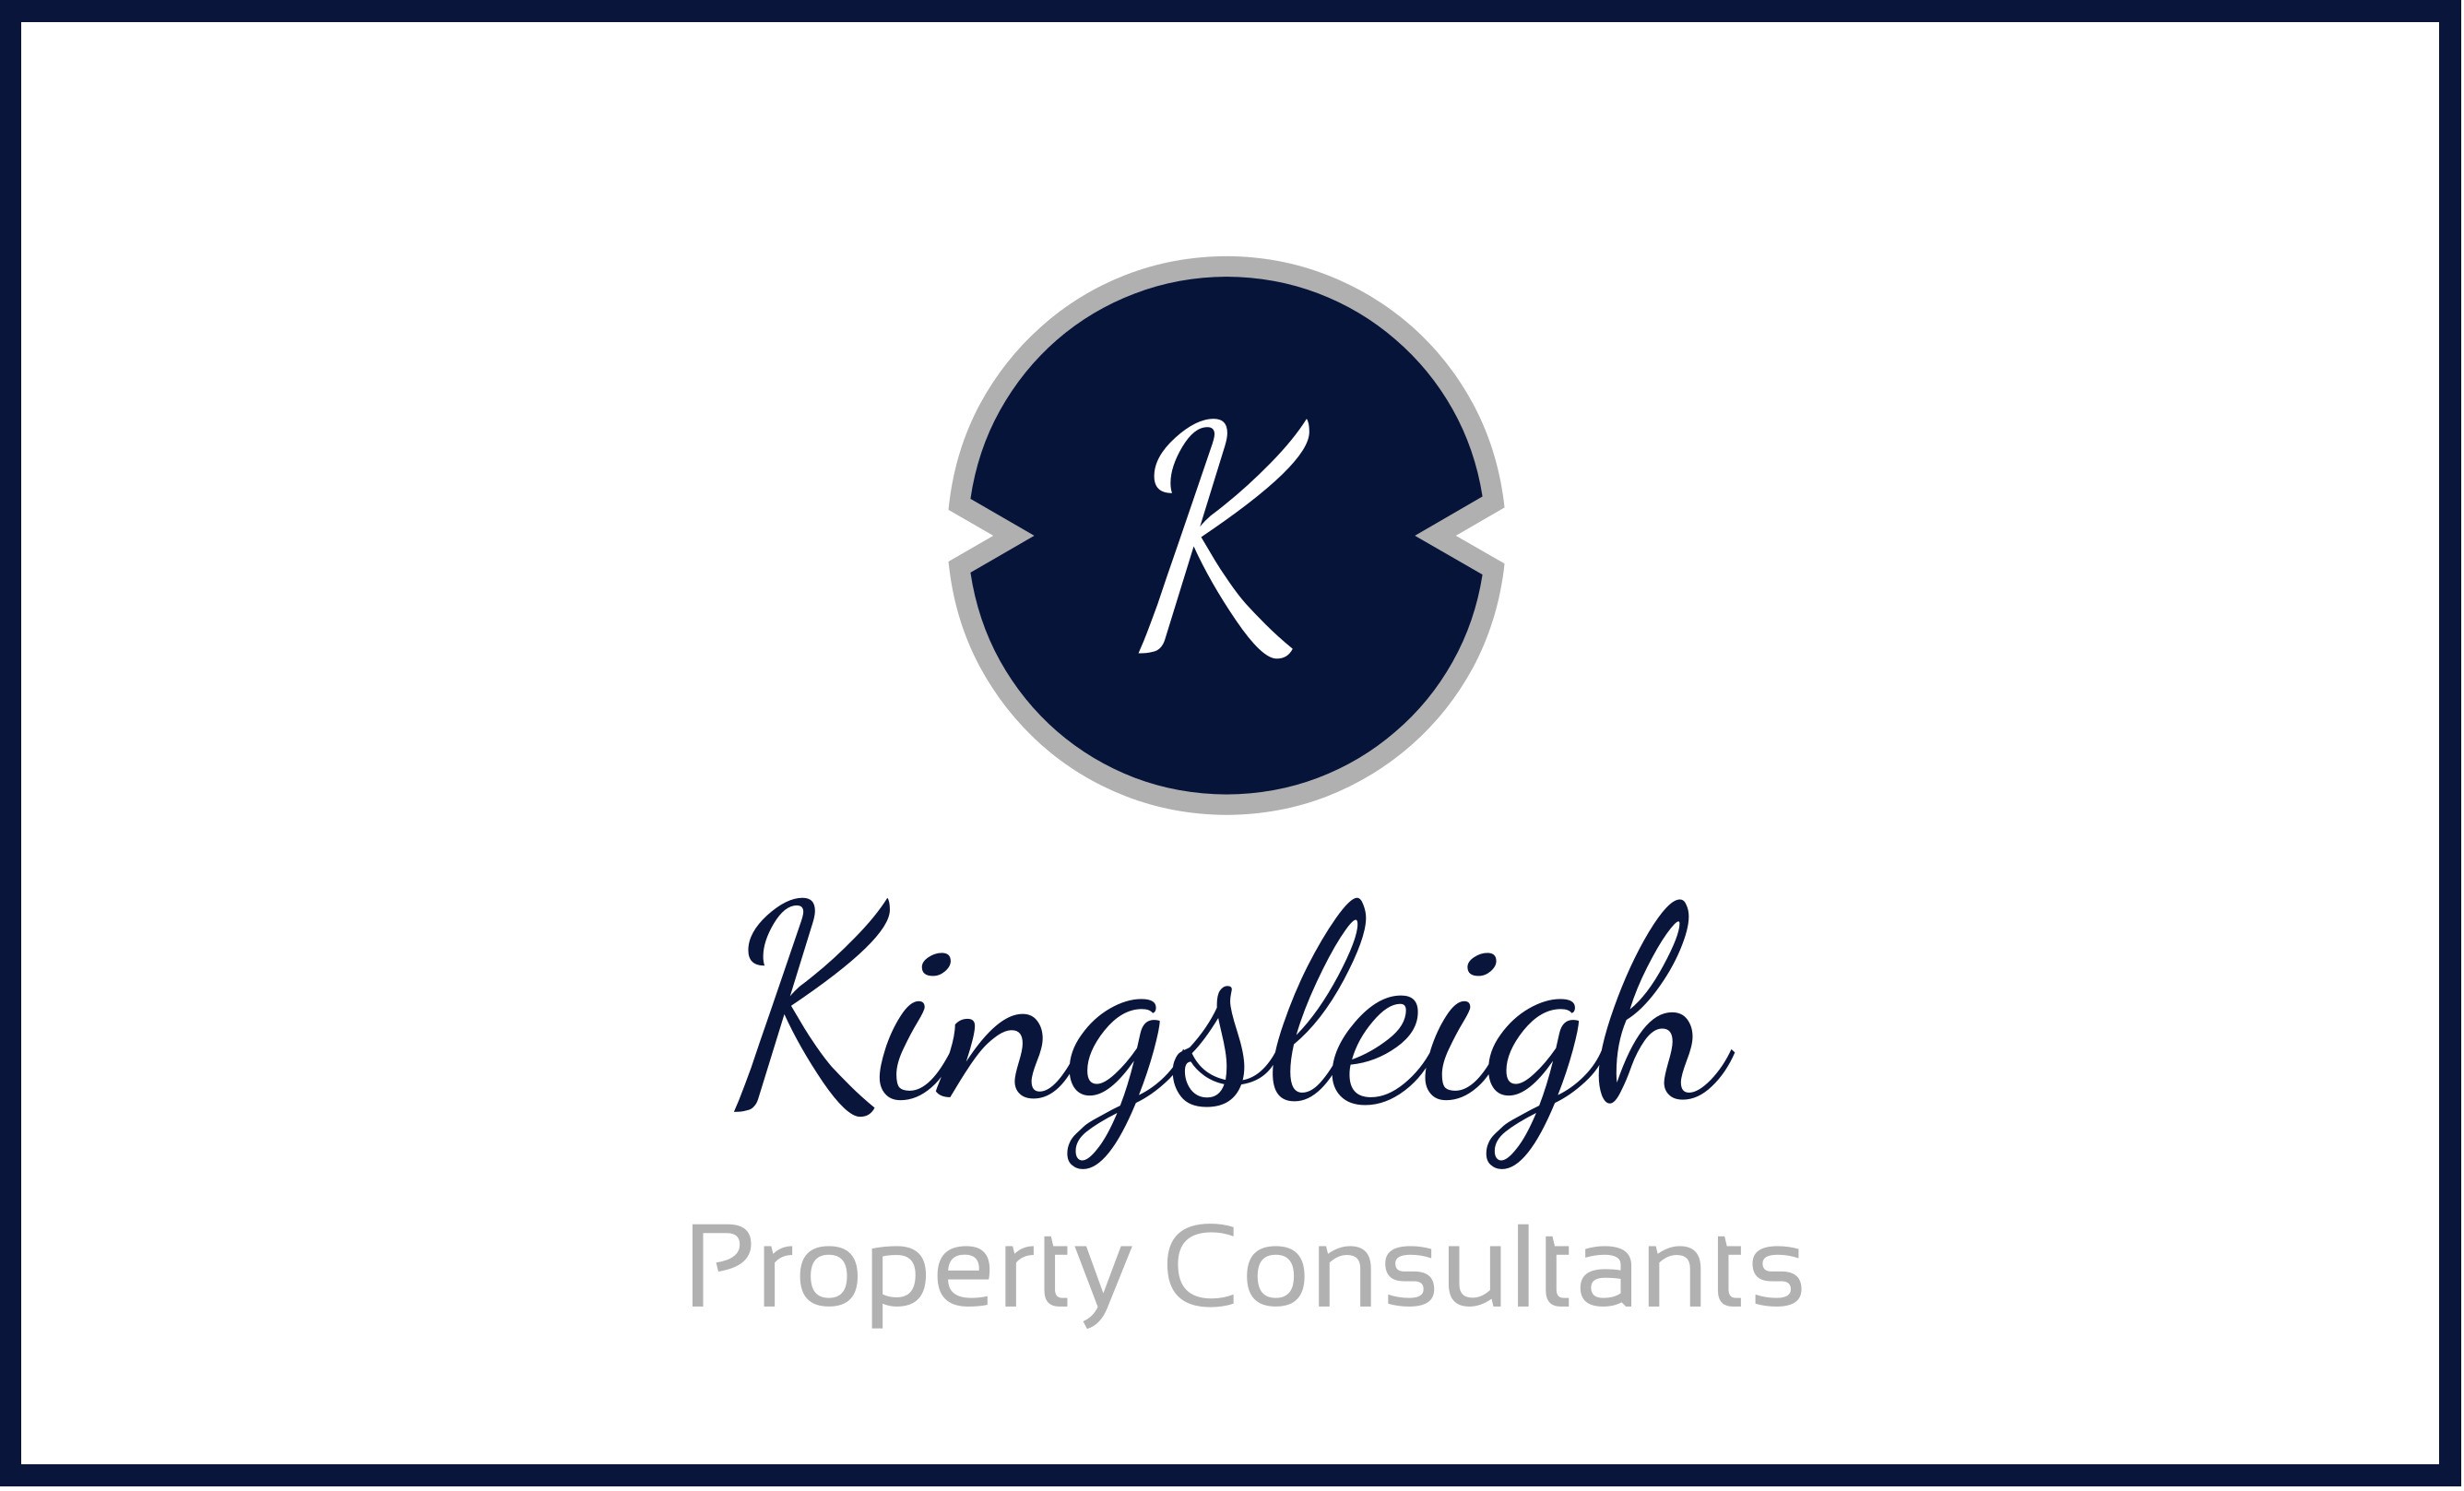 Kingsleigh Estate Agents